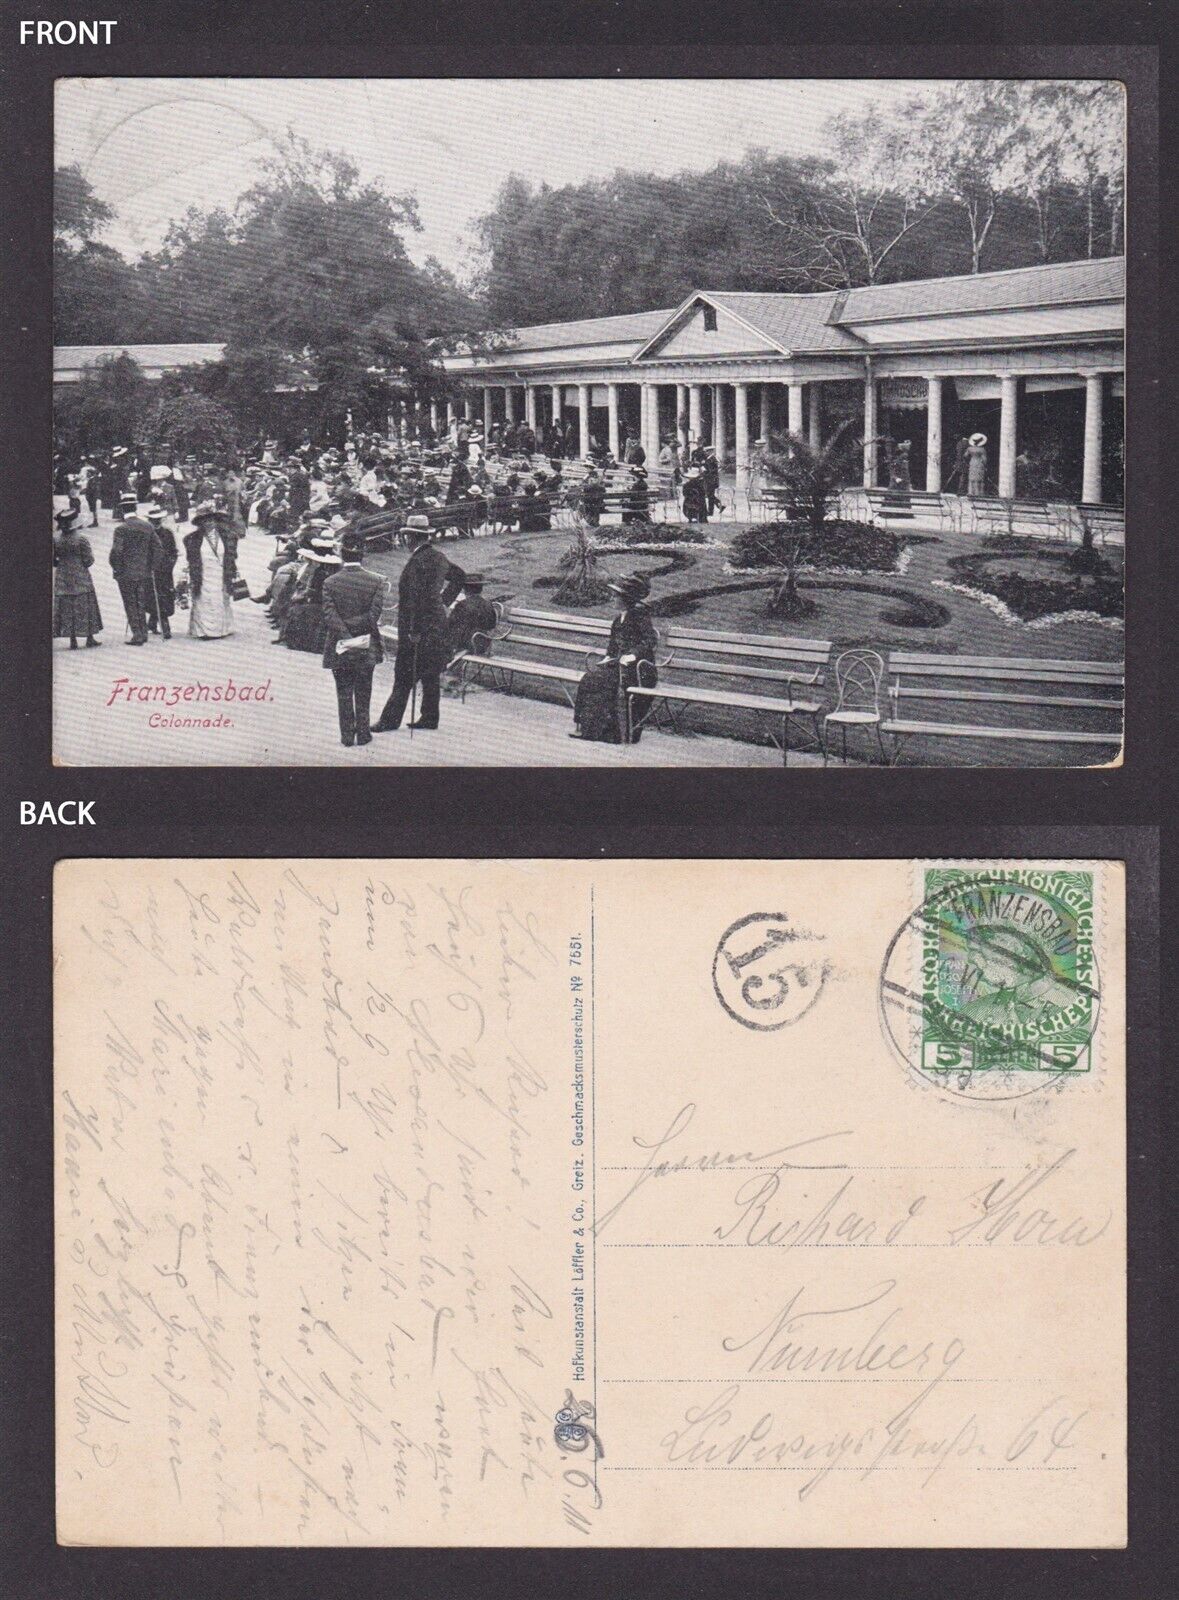 AUSTRIA CZECHIA 1911, Vintage postcard, Franzensbad, Františkovy Lázne 